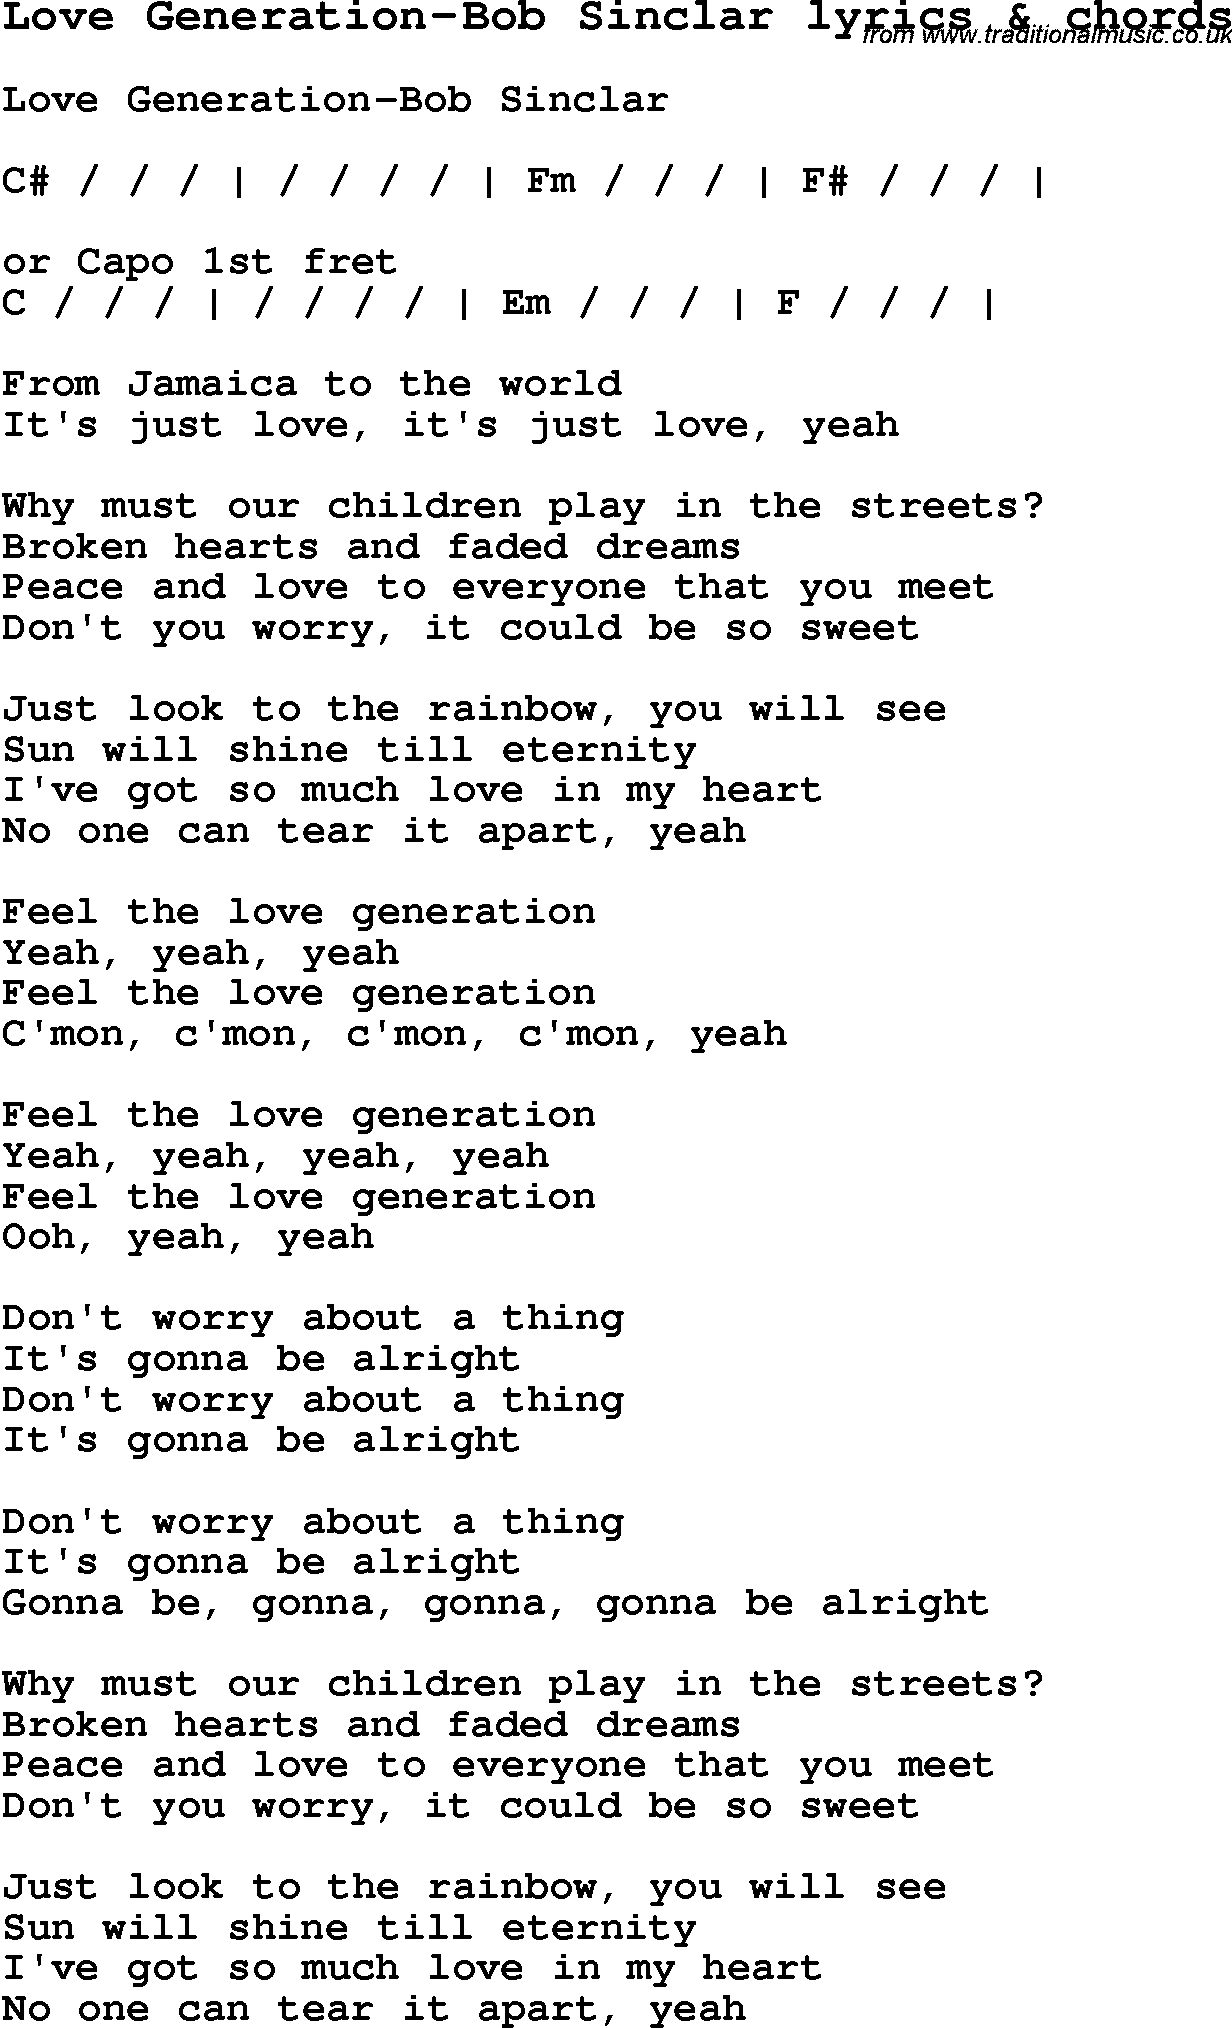 Love Song Lyrics for: Love Generation-Bob Sinclar with chords for Ukulele, Guitar Banjo etc.